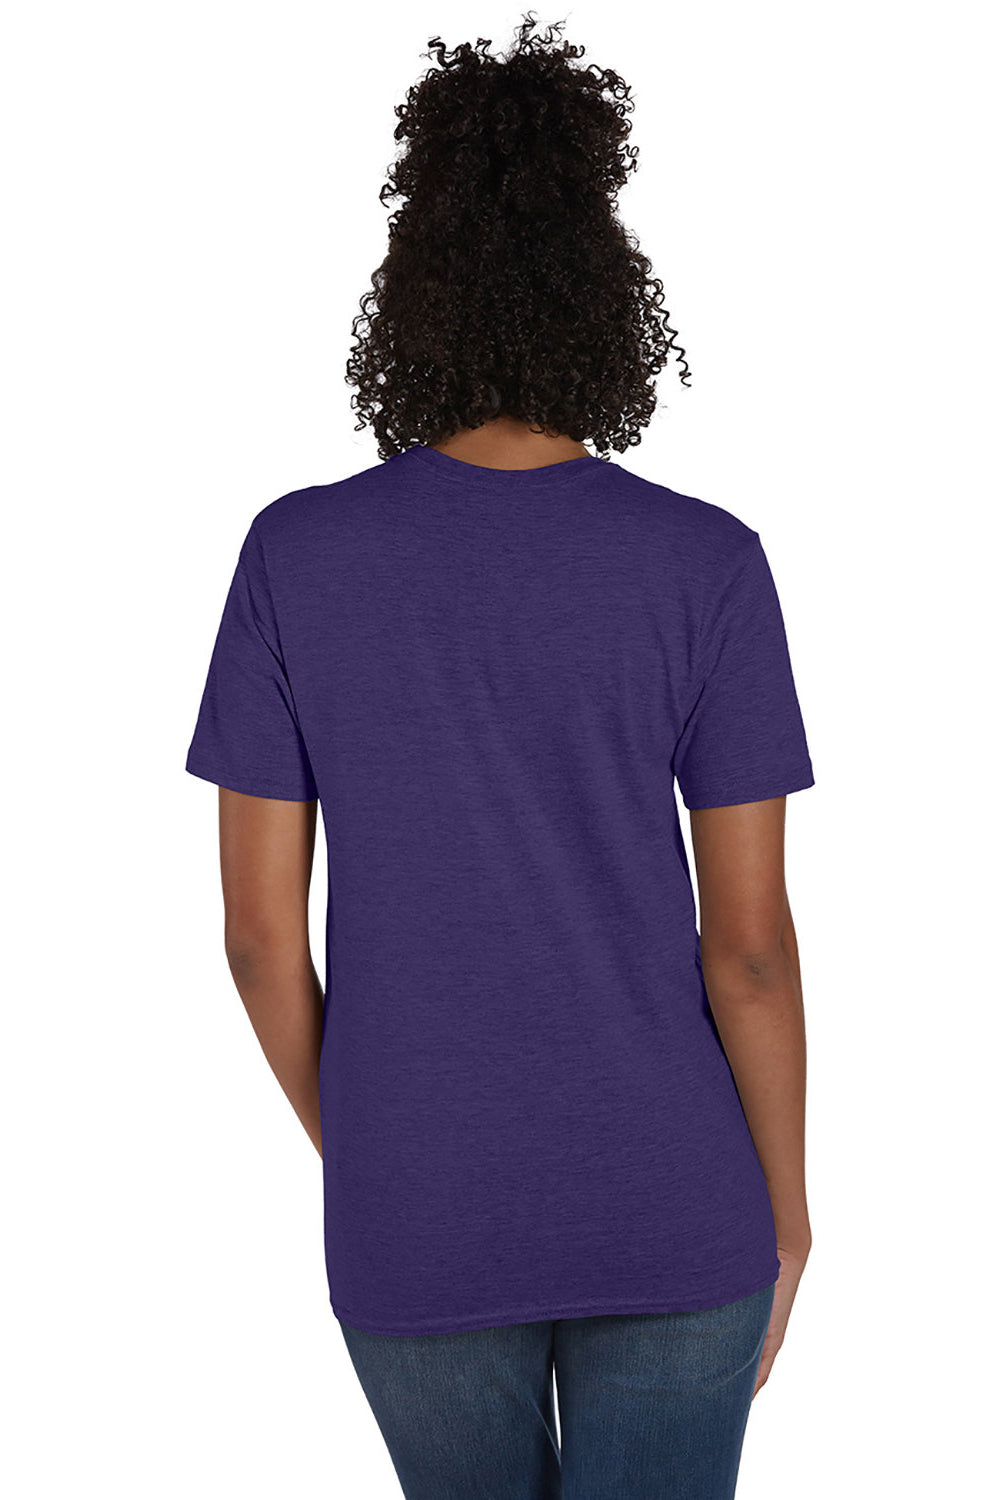 Hanes 4980 Mens Nano-T Short Sleeve Crewneck T-Shirt Heather Grape Smash Purple Back